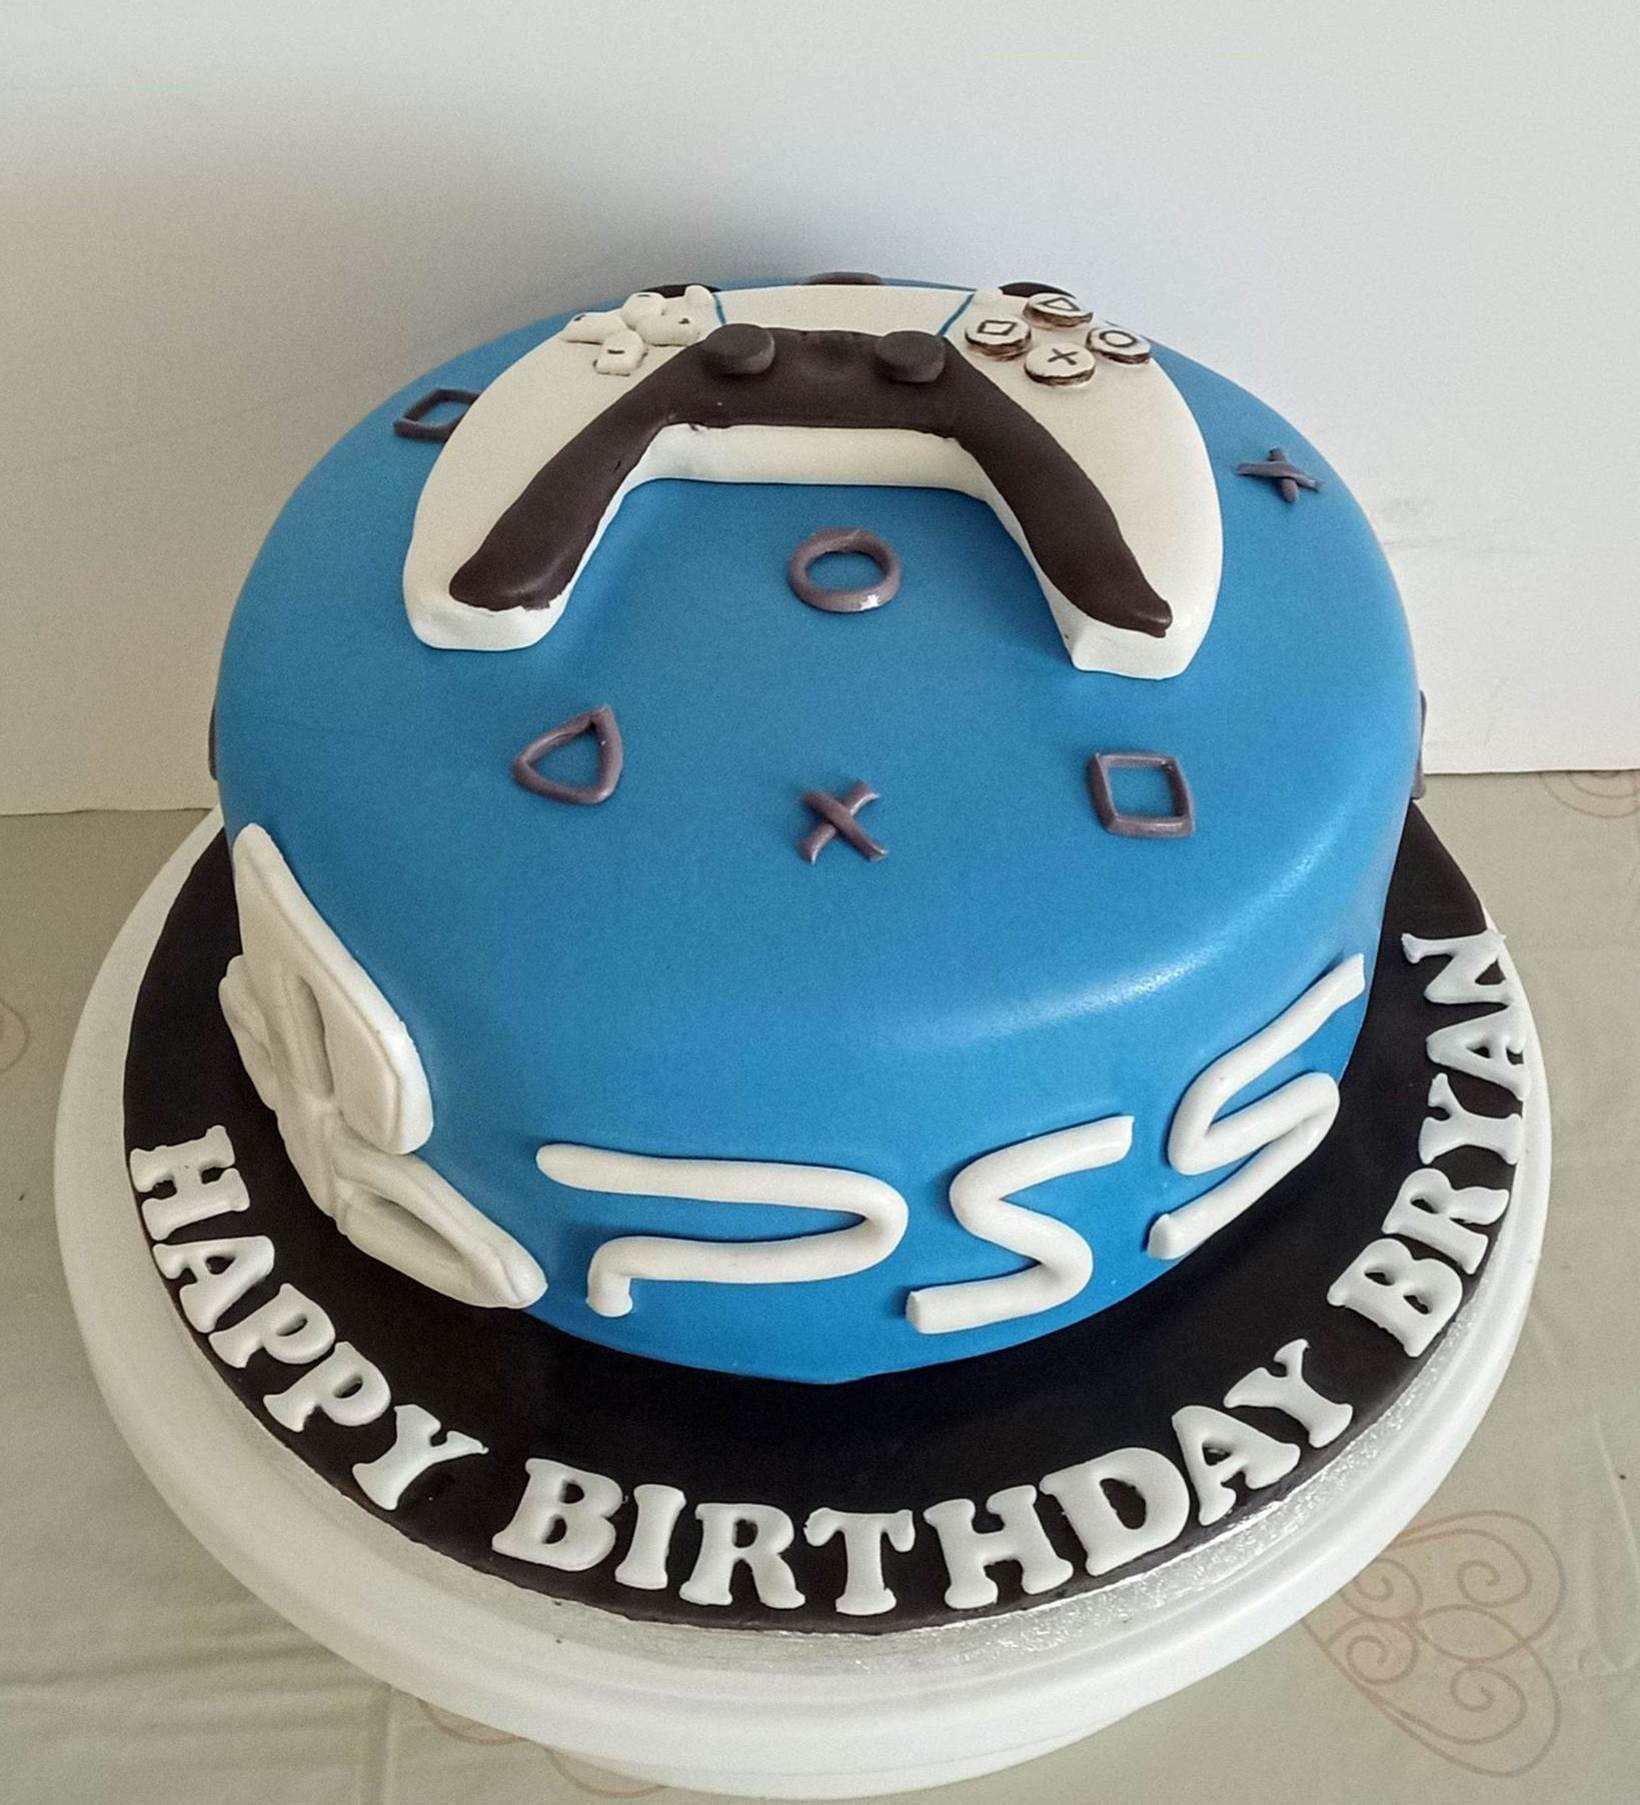 A "Playstation" inspired mans birthday cake